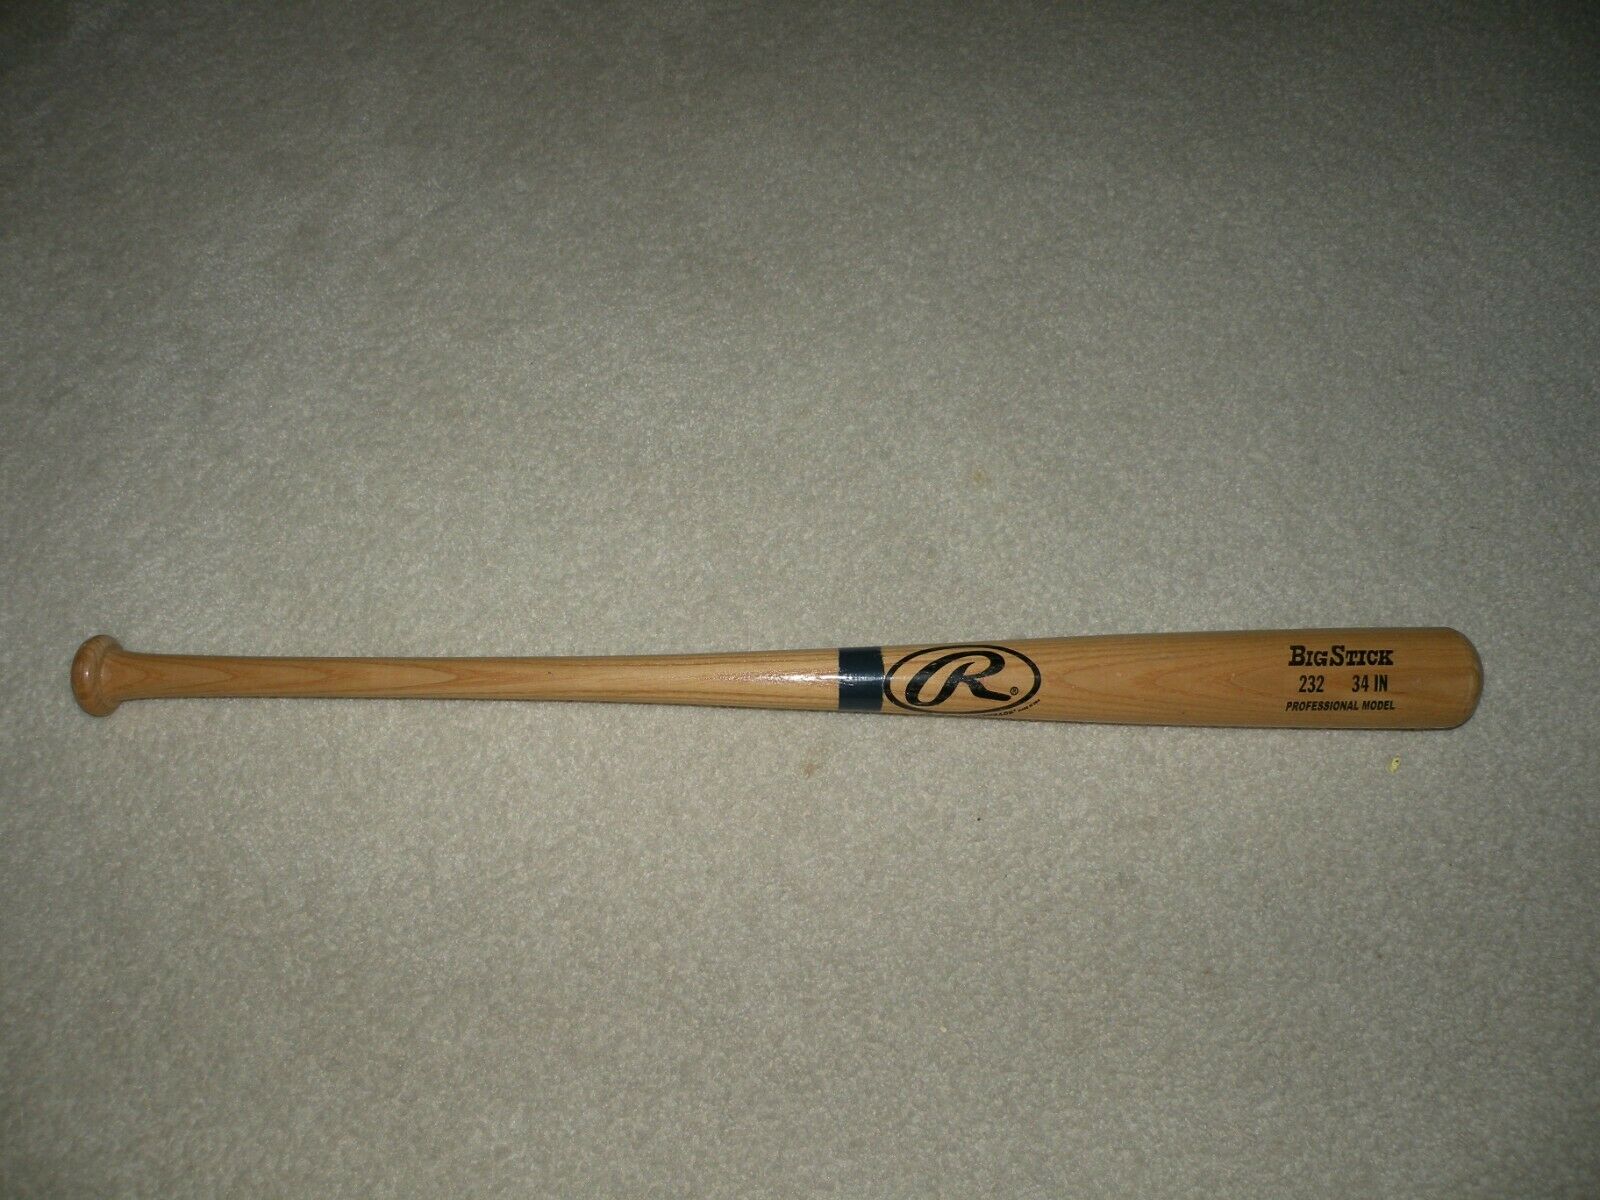 Rawlings New Adirondack Pro Big Stick Professional Model 34in 232 Ash Wood Bat